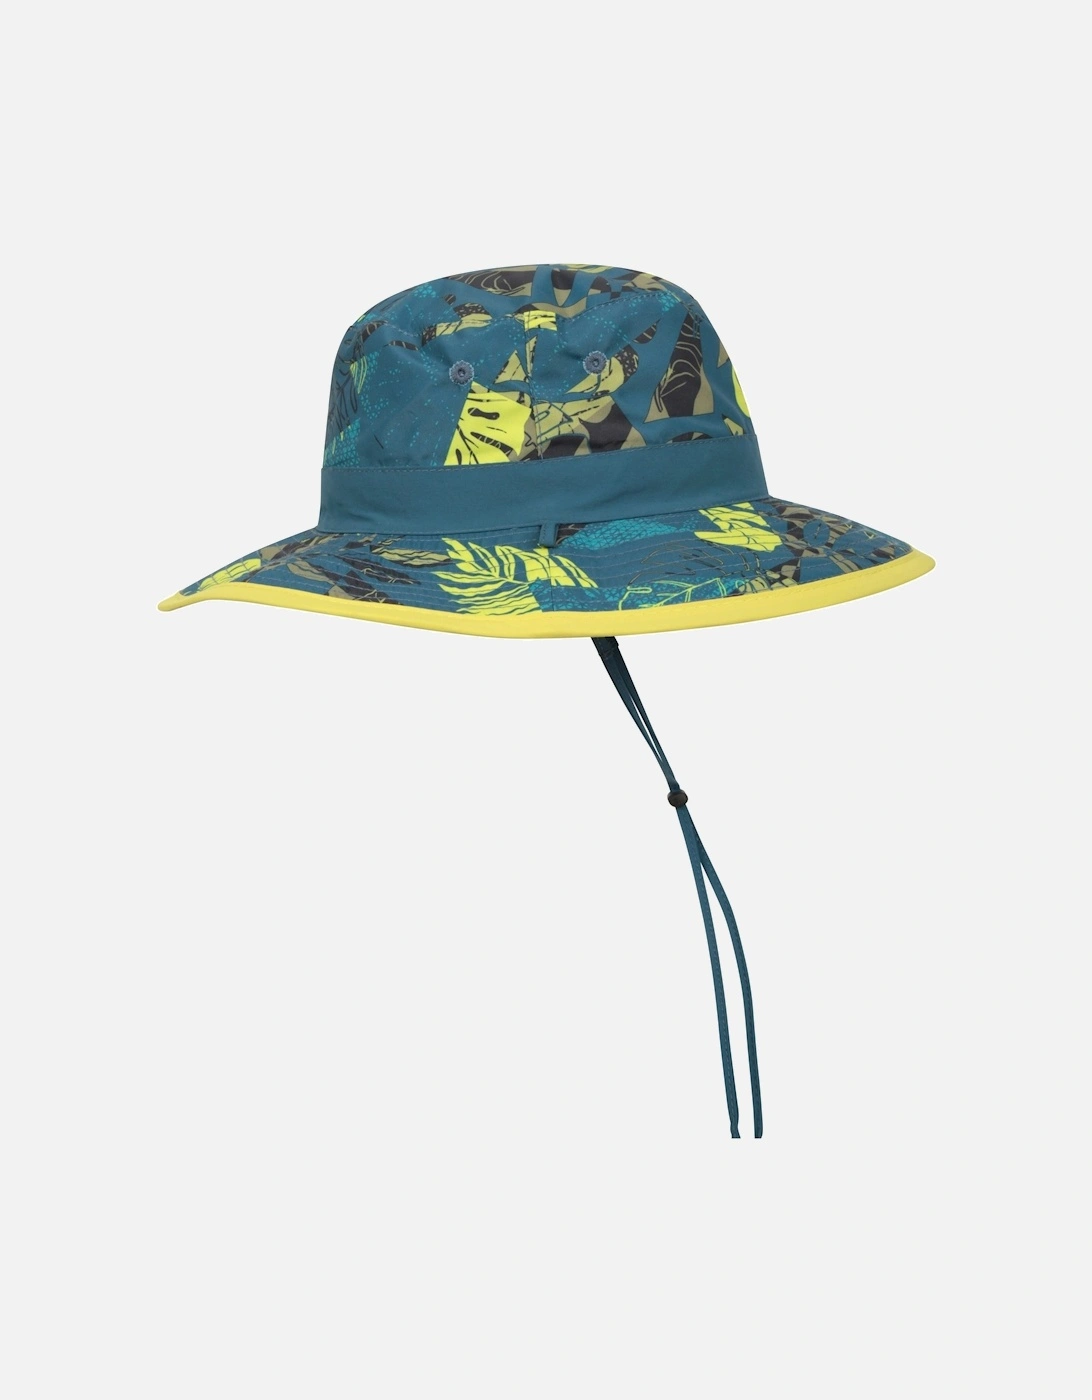 Childrens/Kids Printed Water Resistant Sun Hat